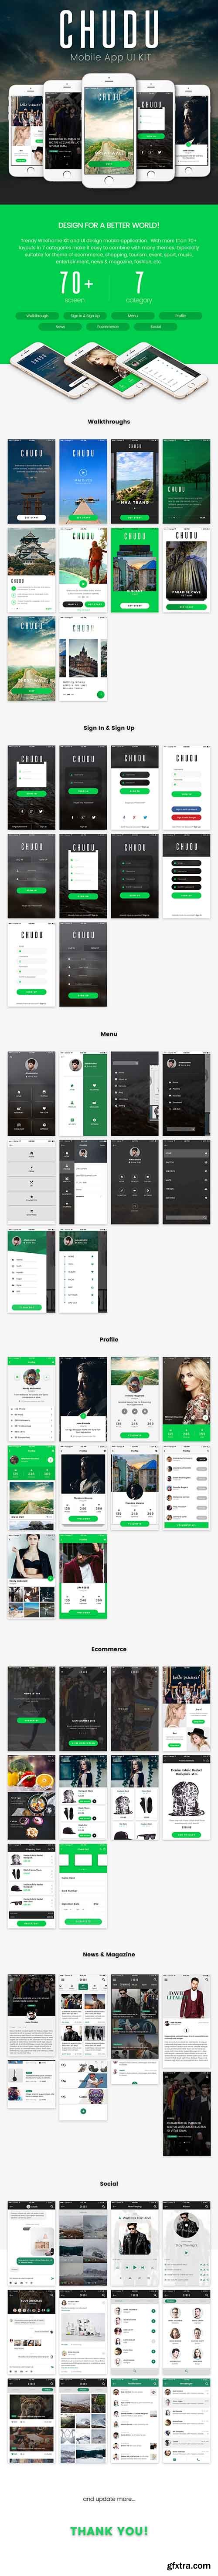 Chudu Mobile UI Kit - iOS Mobile Application UI Kit for Sketch & Photoshop